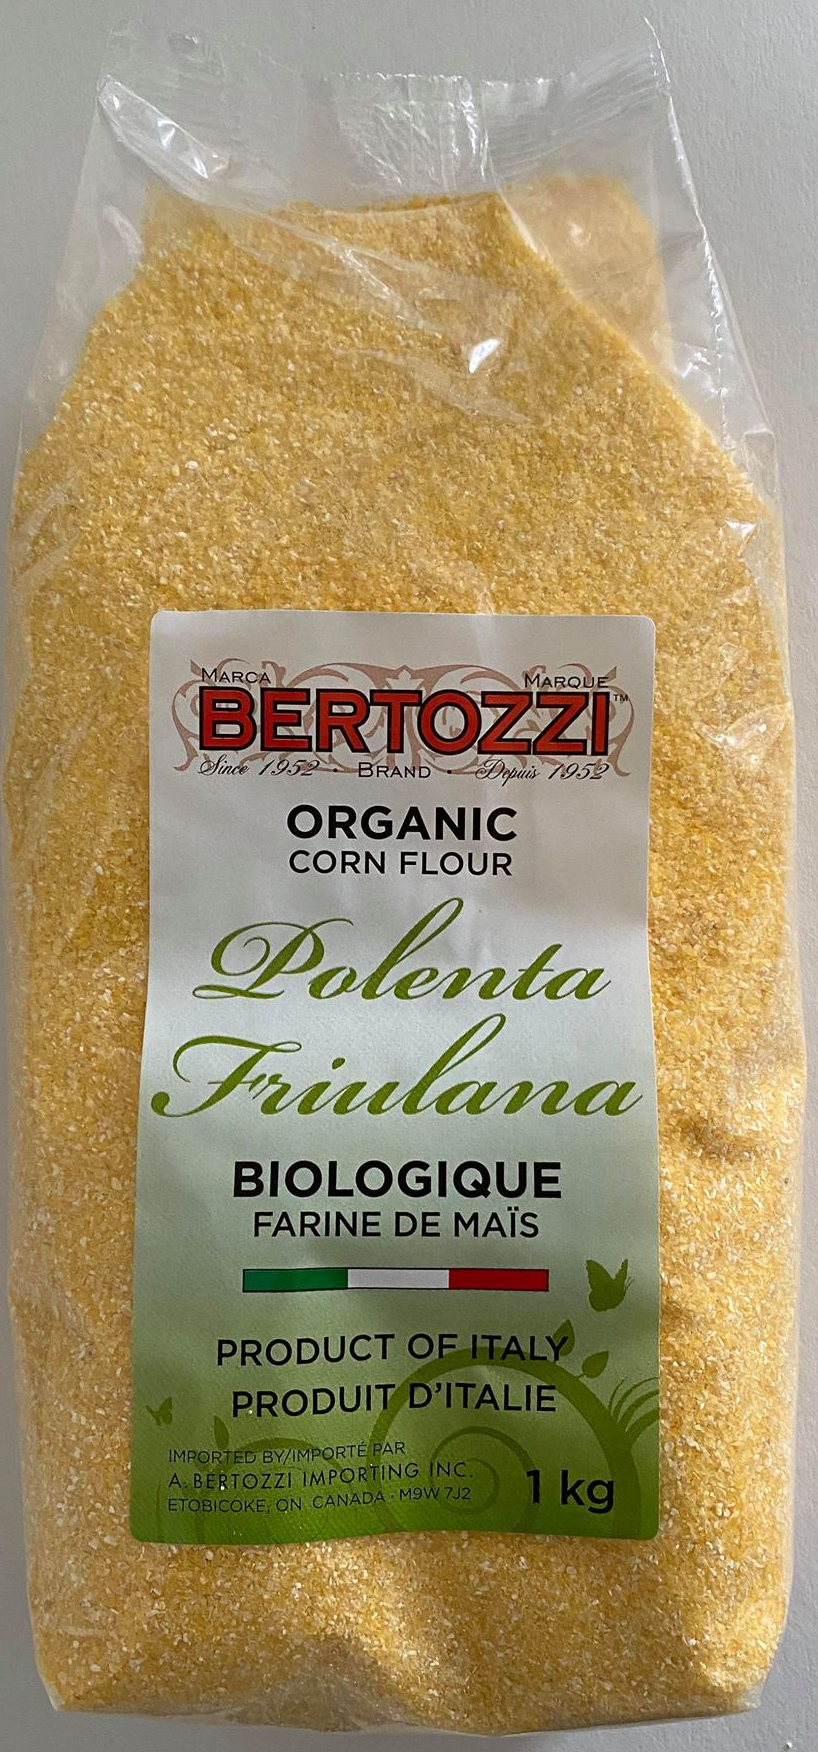 Bertozzi - Stone-Ground Polenta Friulana - Organic - 1kg